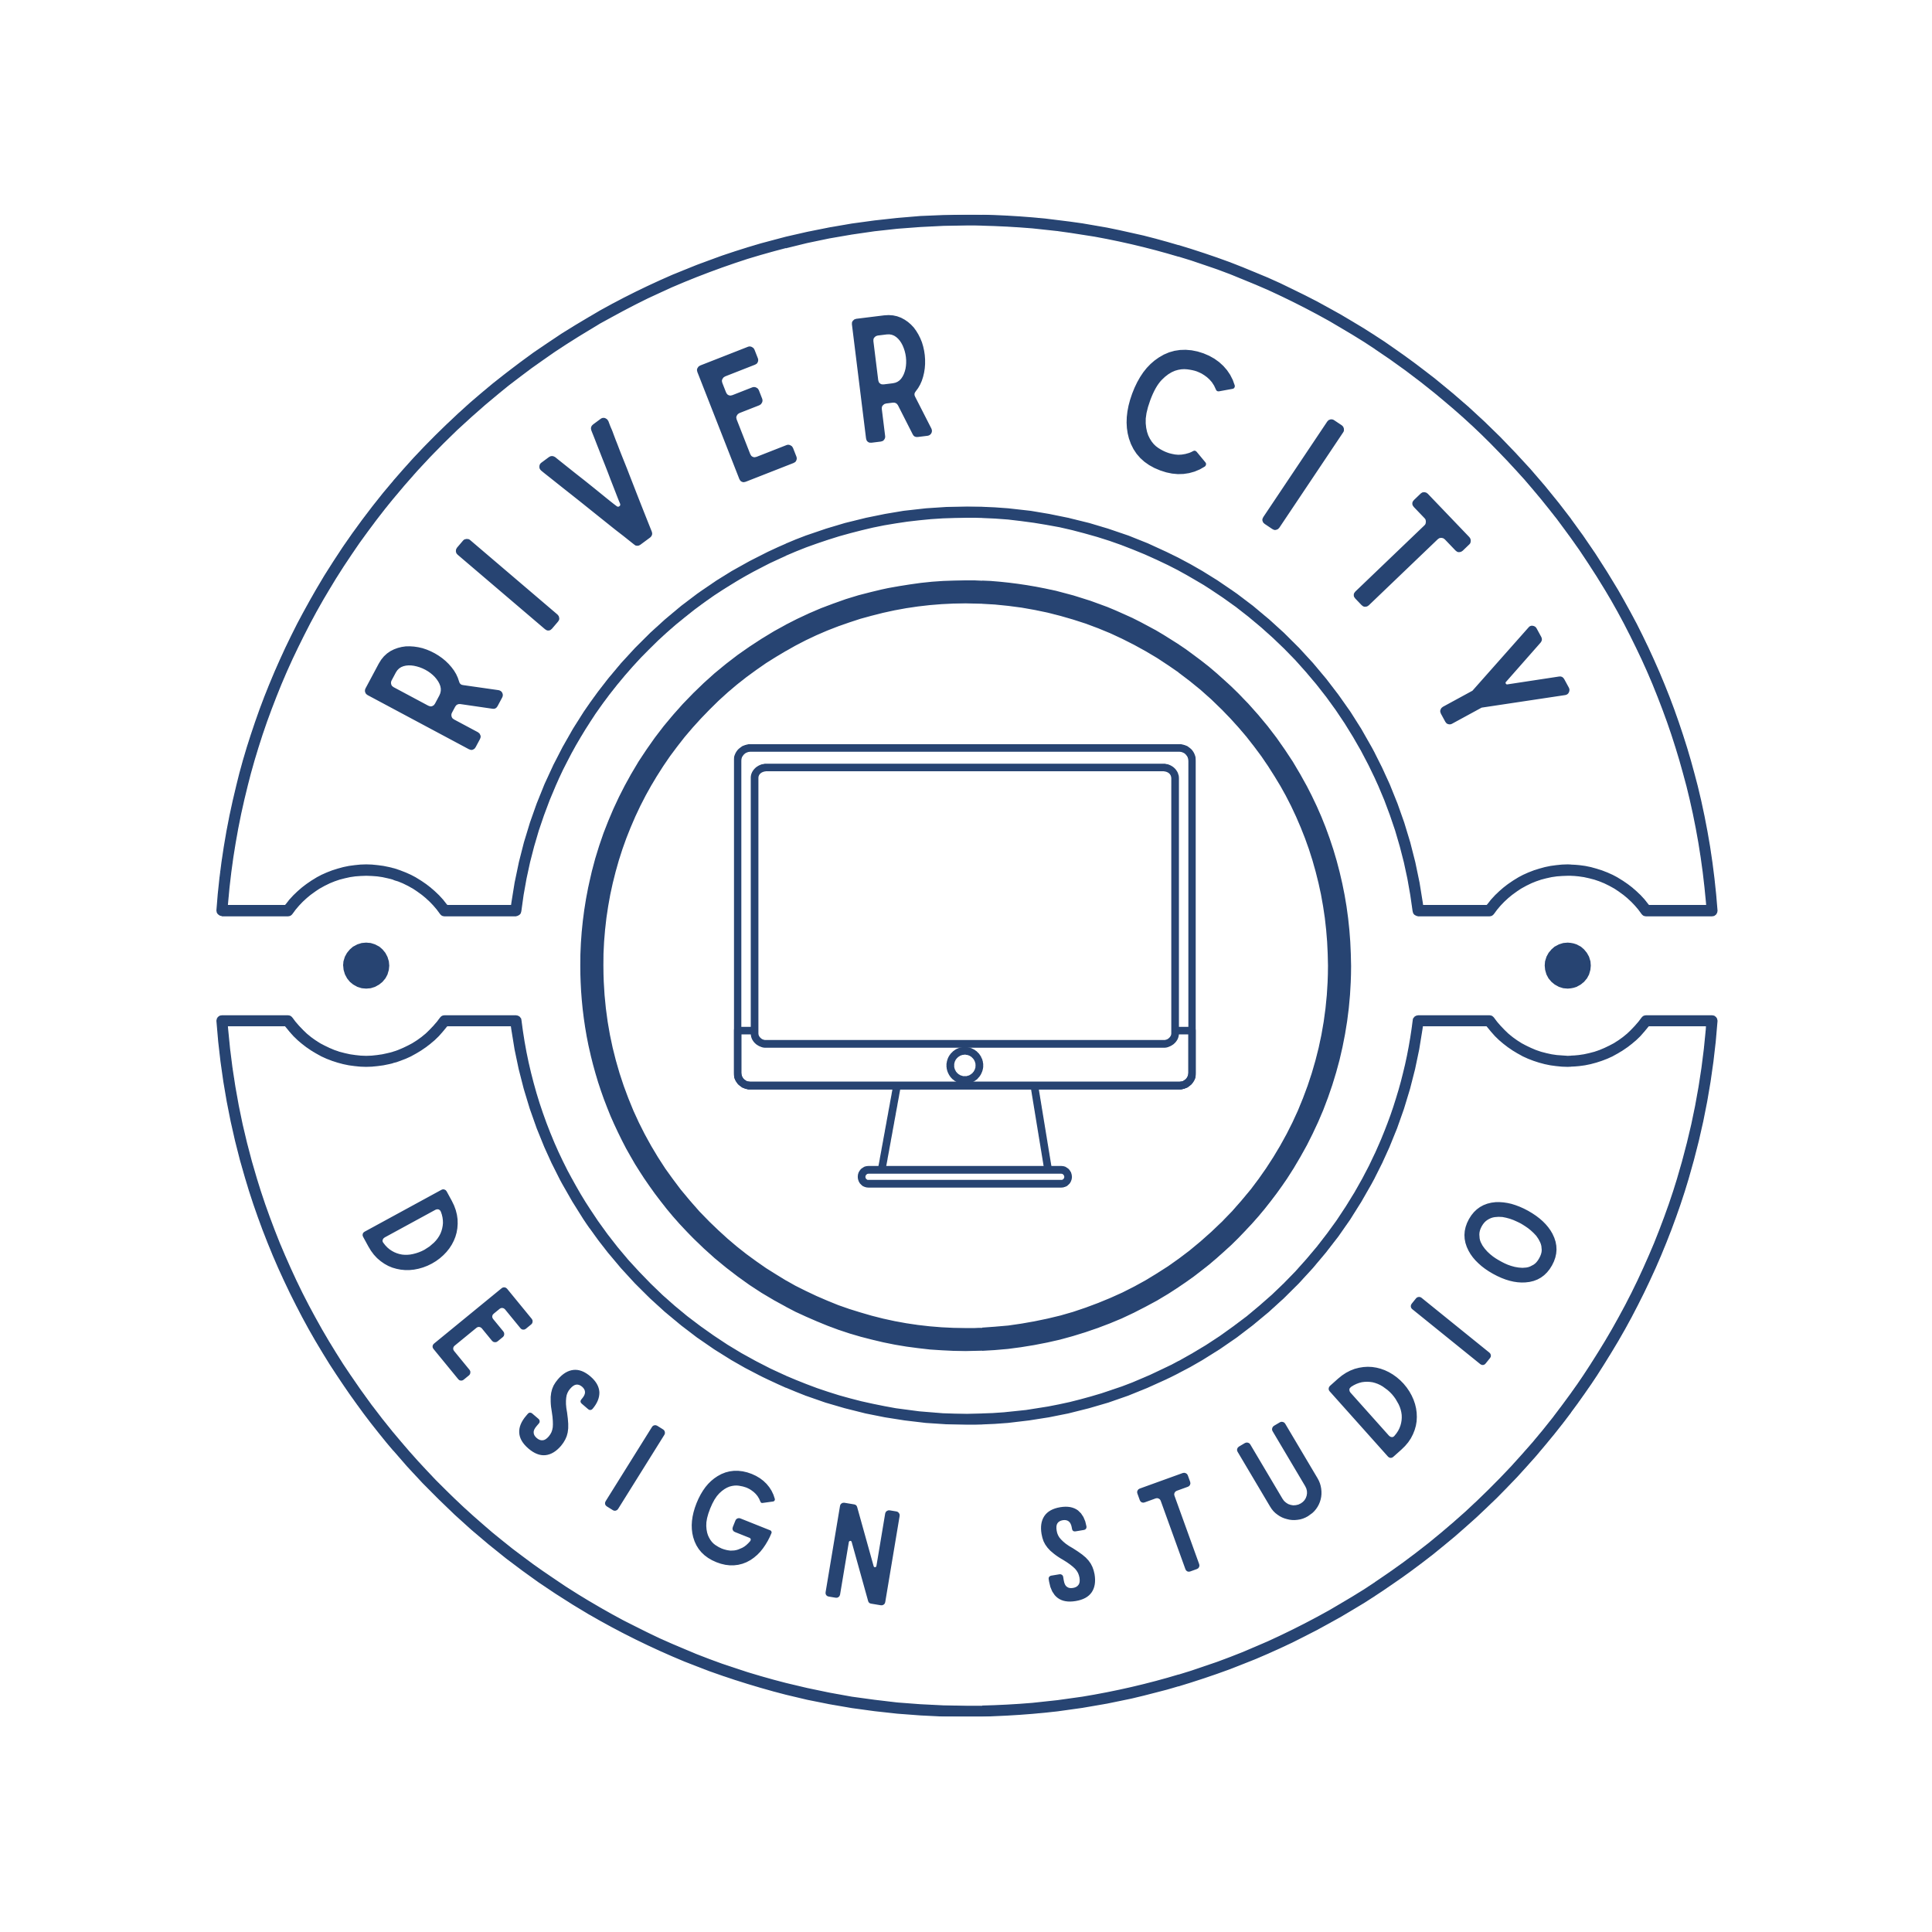 River City Design Studio